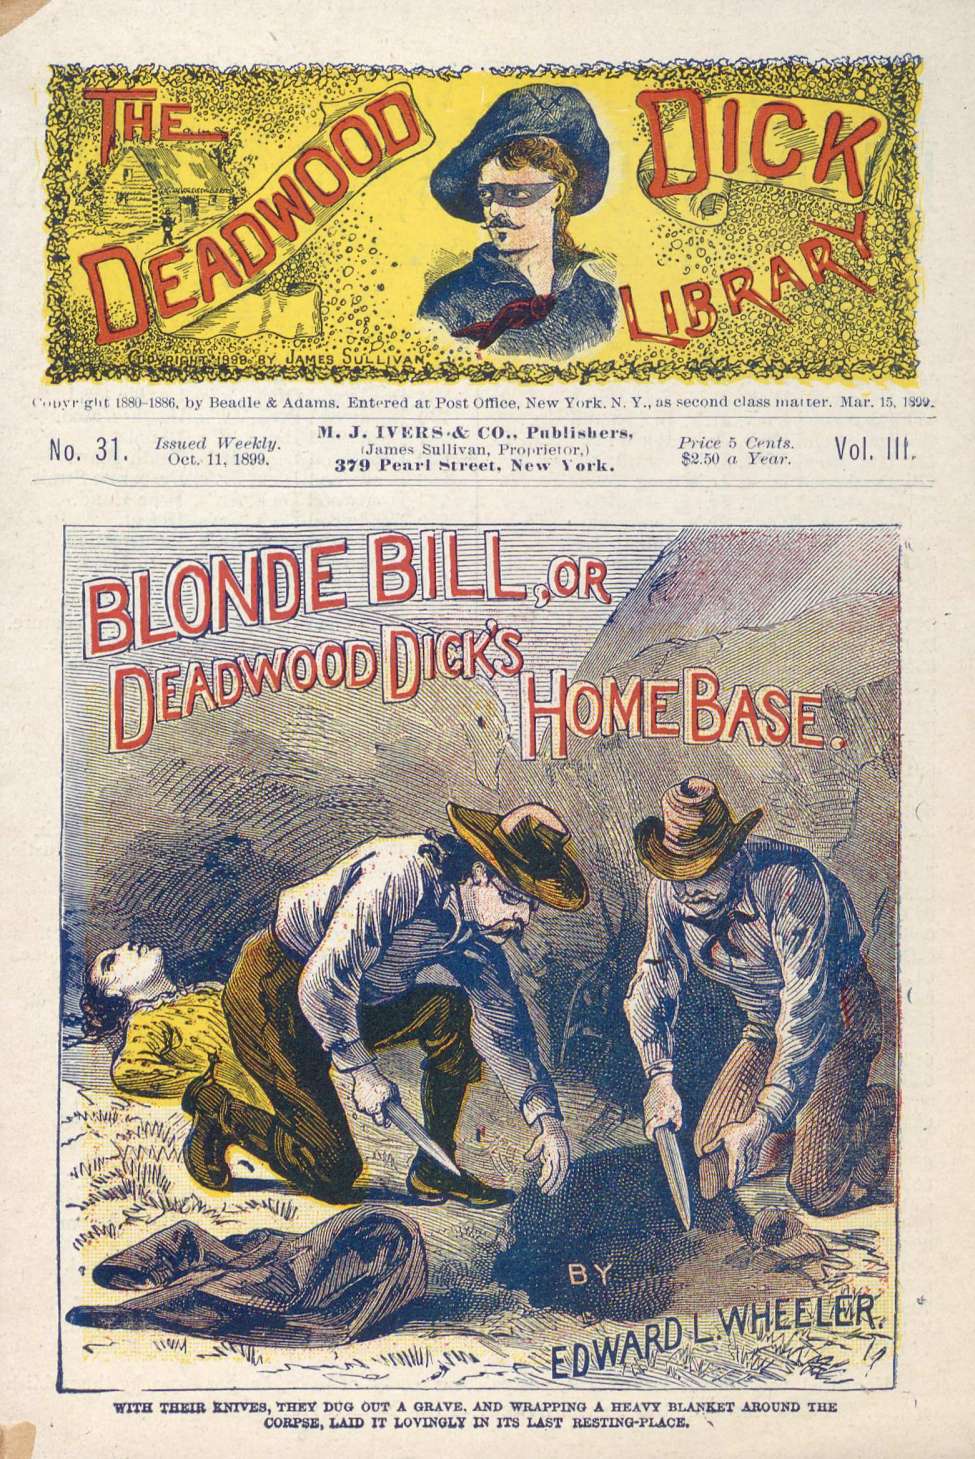 Book Cover For Deadwood Dick Library v2 31 - Blonde Bill